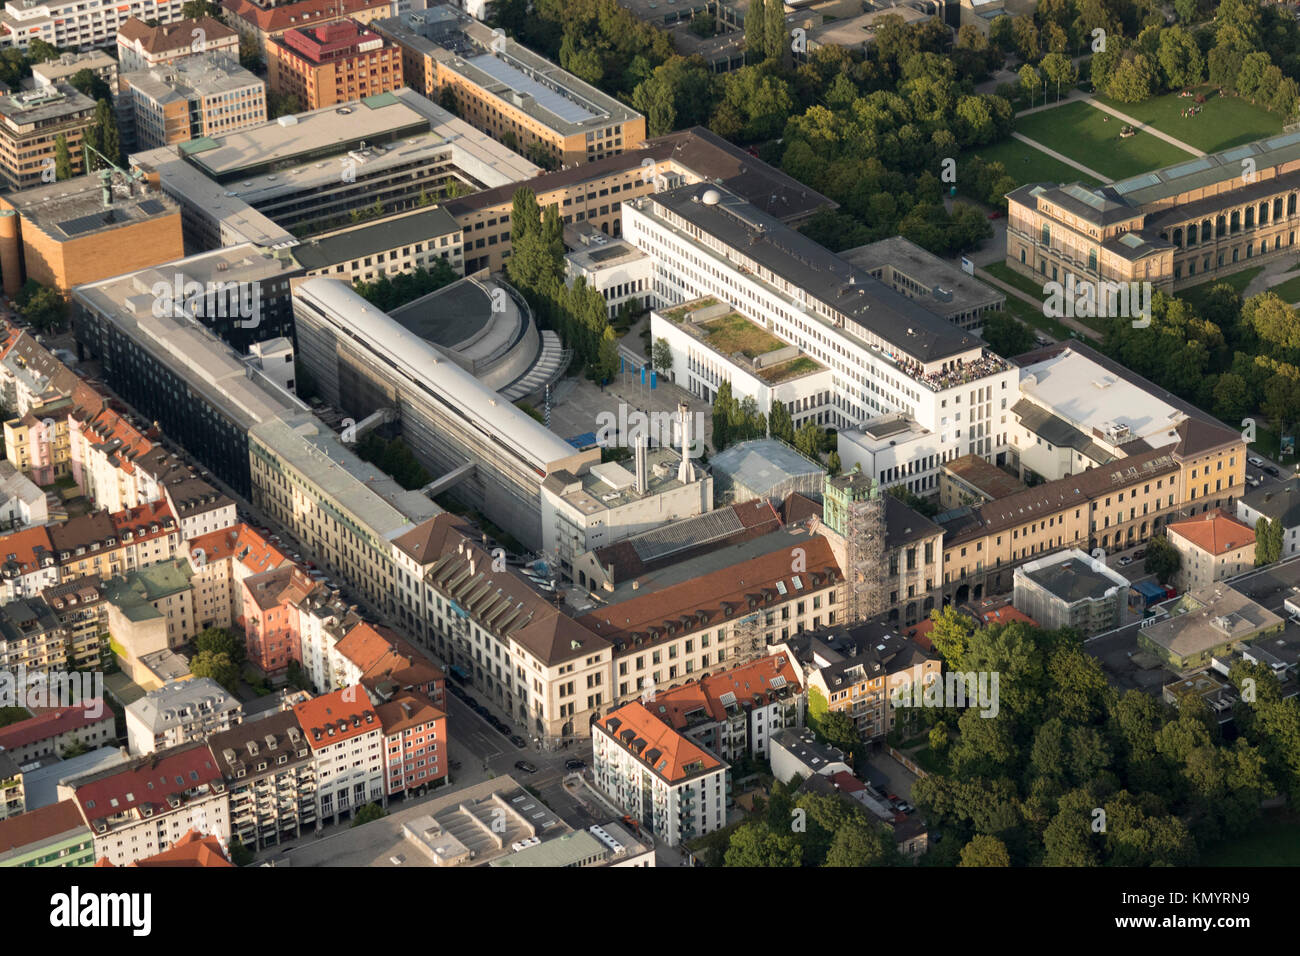 Vista aérea del campus de la Universidad Técnica de Munich, la Technische Universität München, Baviera, Alemania Foto de stock